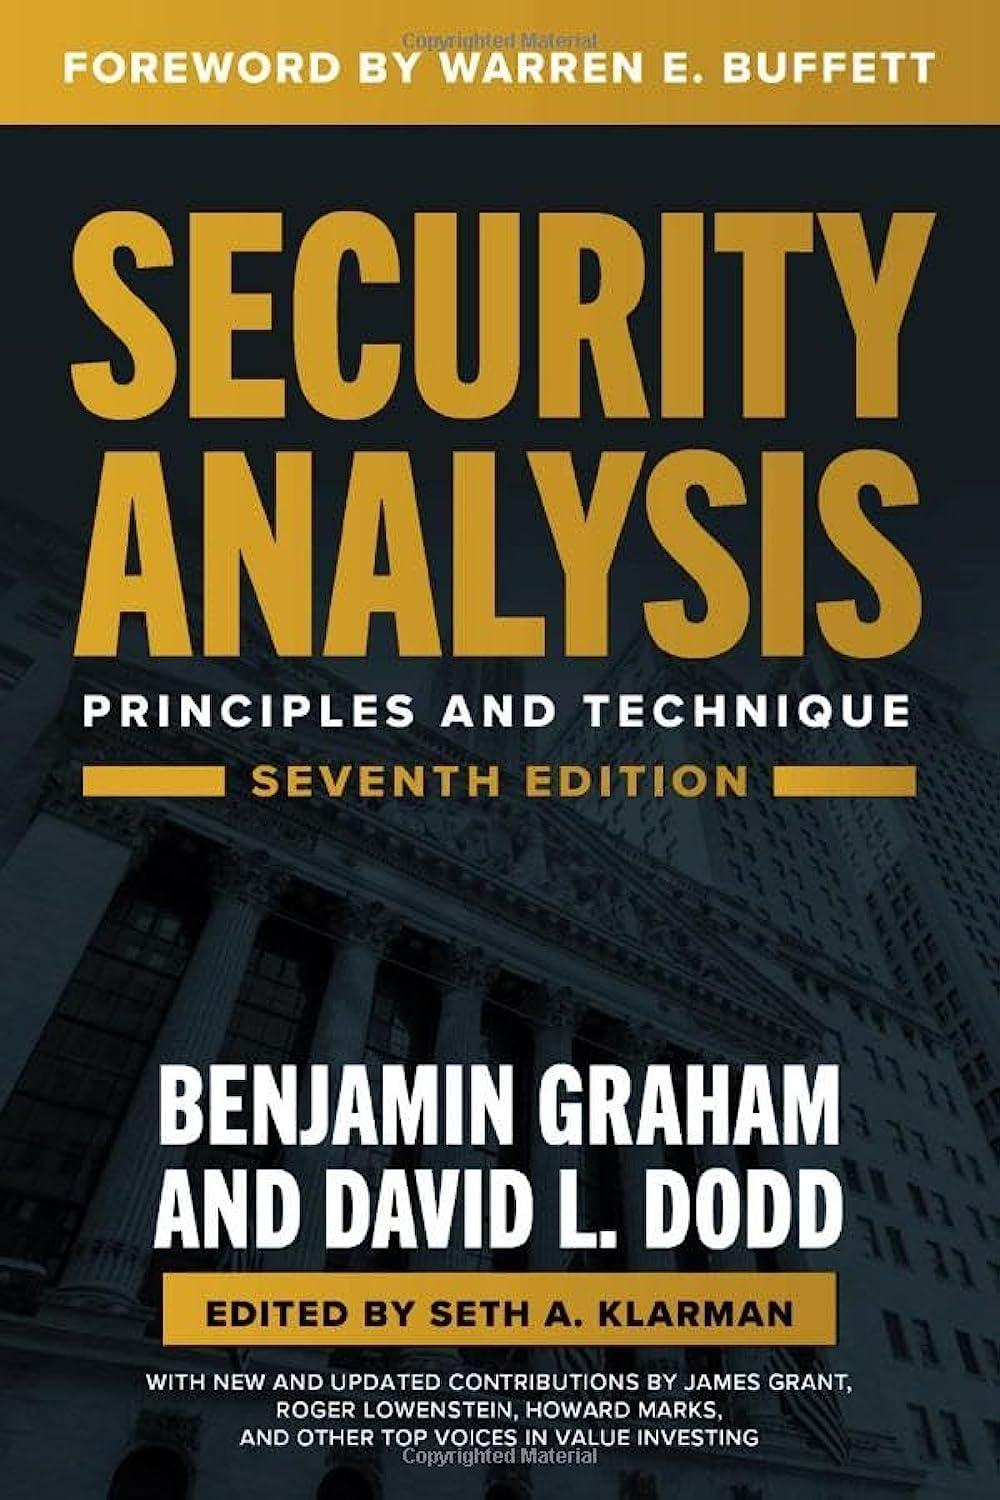 security analysis principles and techniques 7th edition benjamin graham, david dodd, seth a. klarman, warren